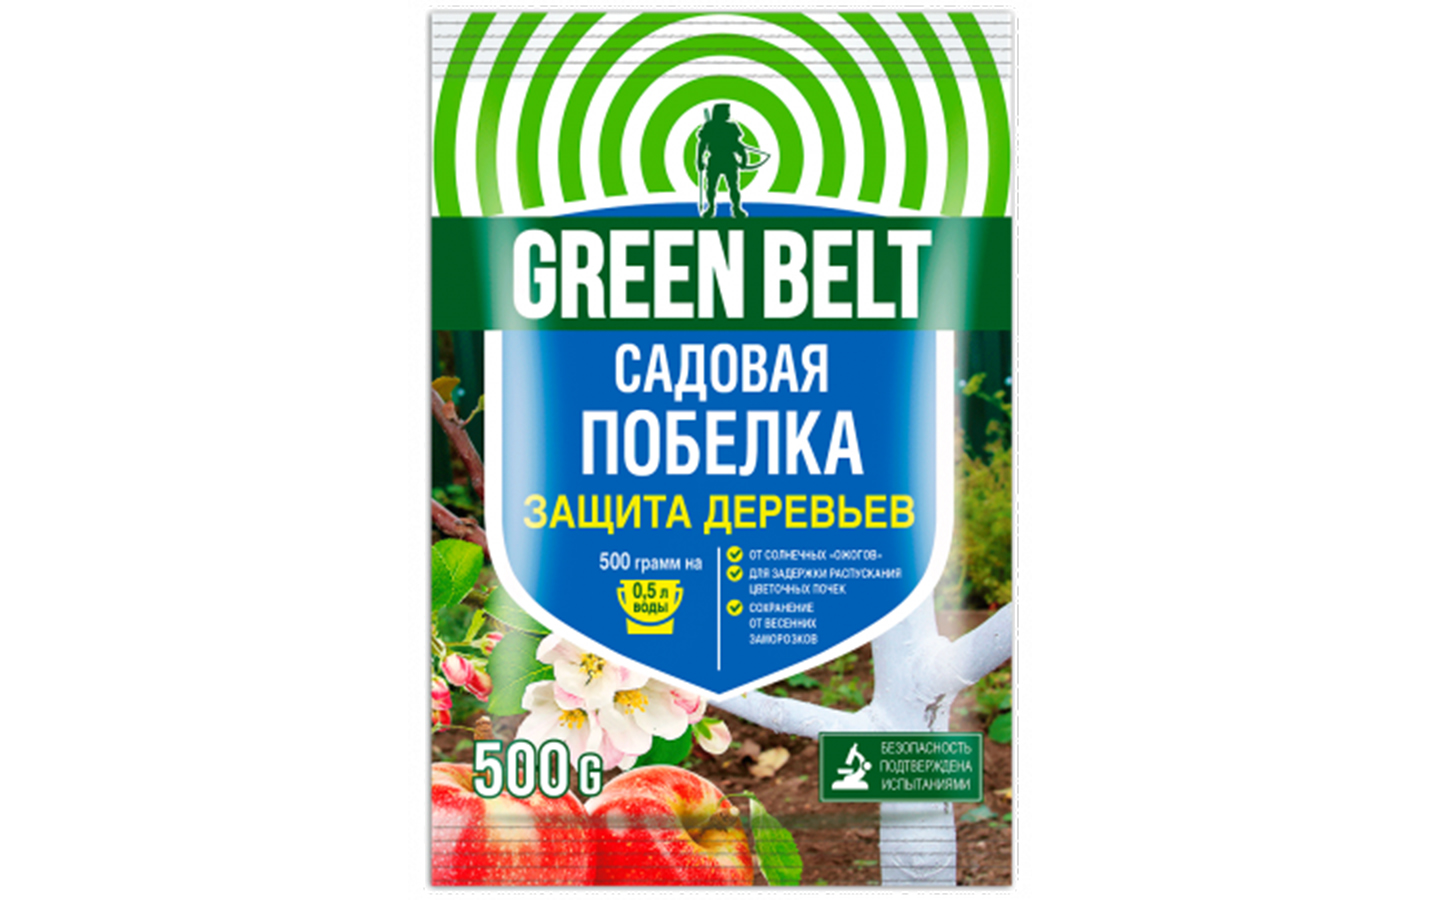 GREEN BELT Садовая побелка, пакет 500 гр, 01-492